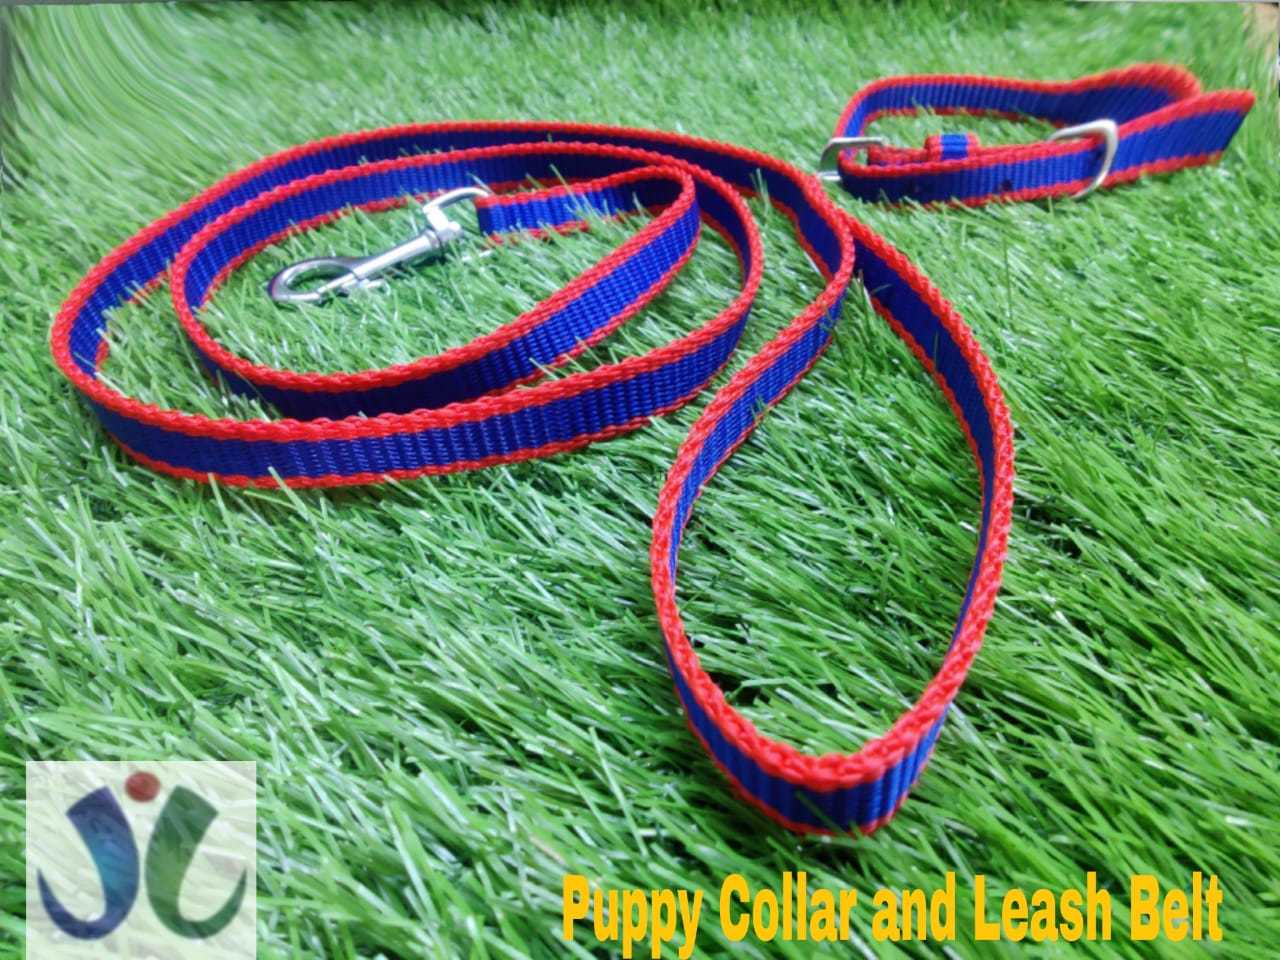 dog collars